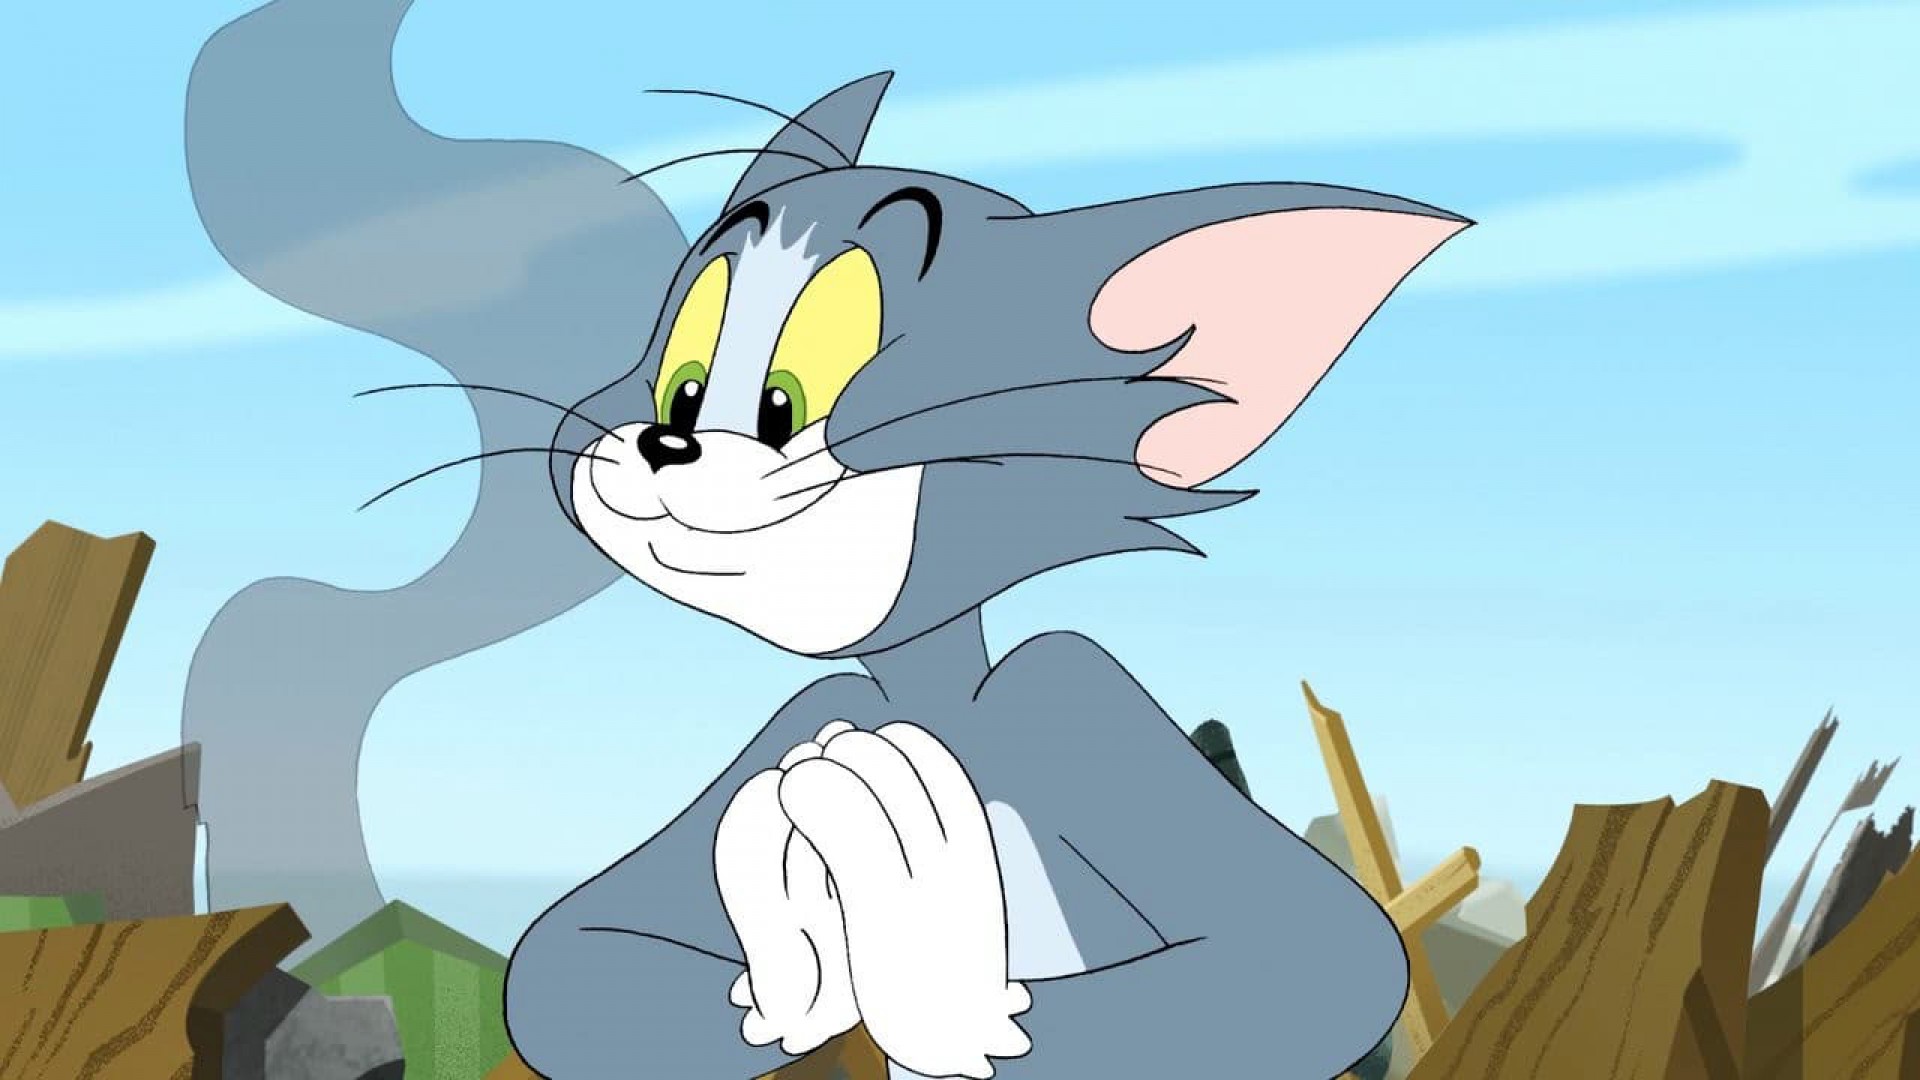 Tom and jerry 55. Tom and Jerry. Том и Джерри Tom and Jerry. Том и Джерри 2005. Том и Джерри 2001.